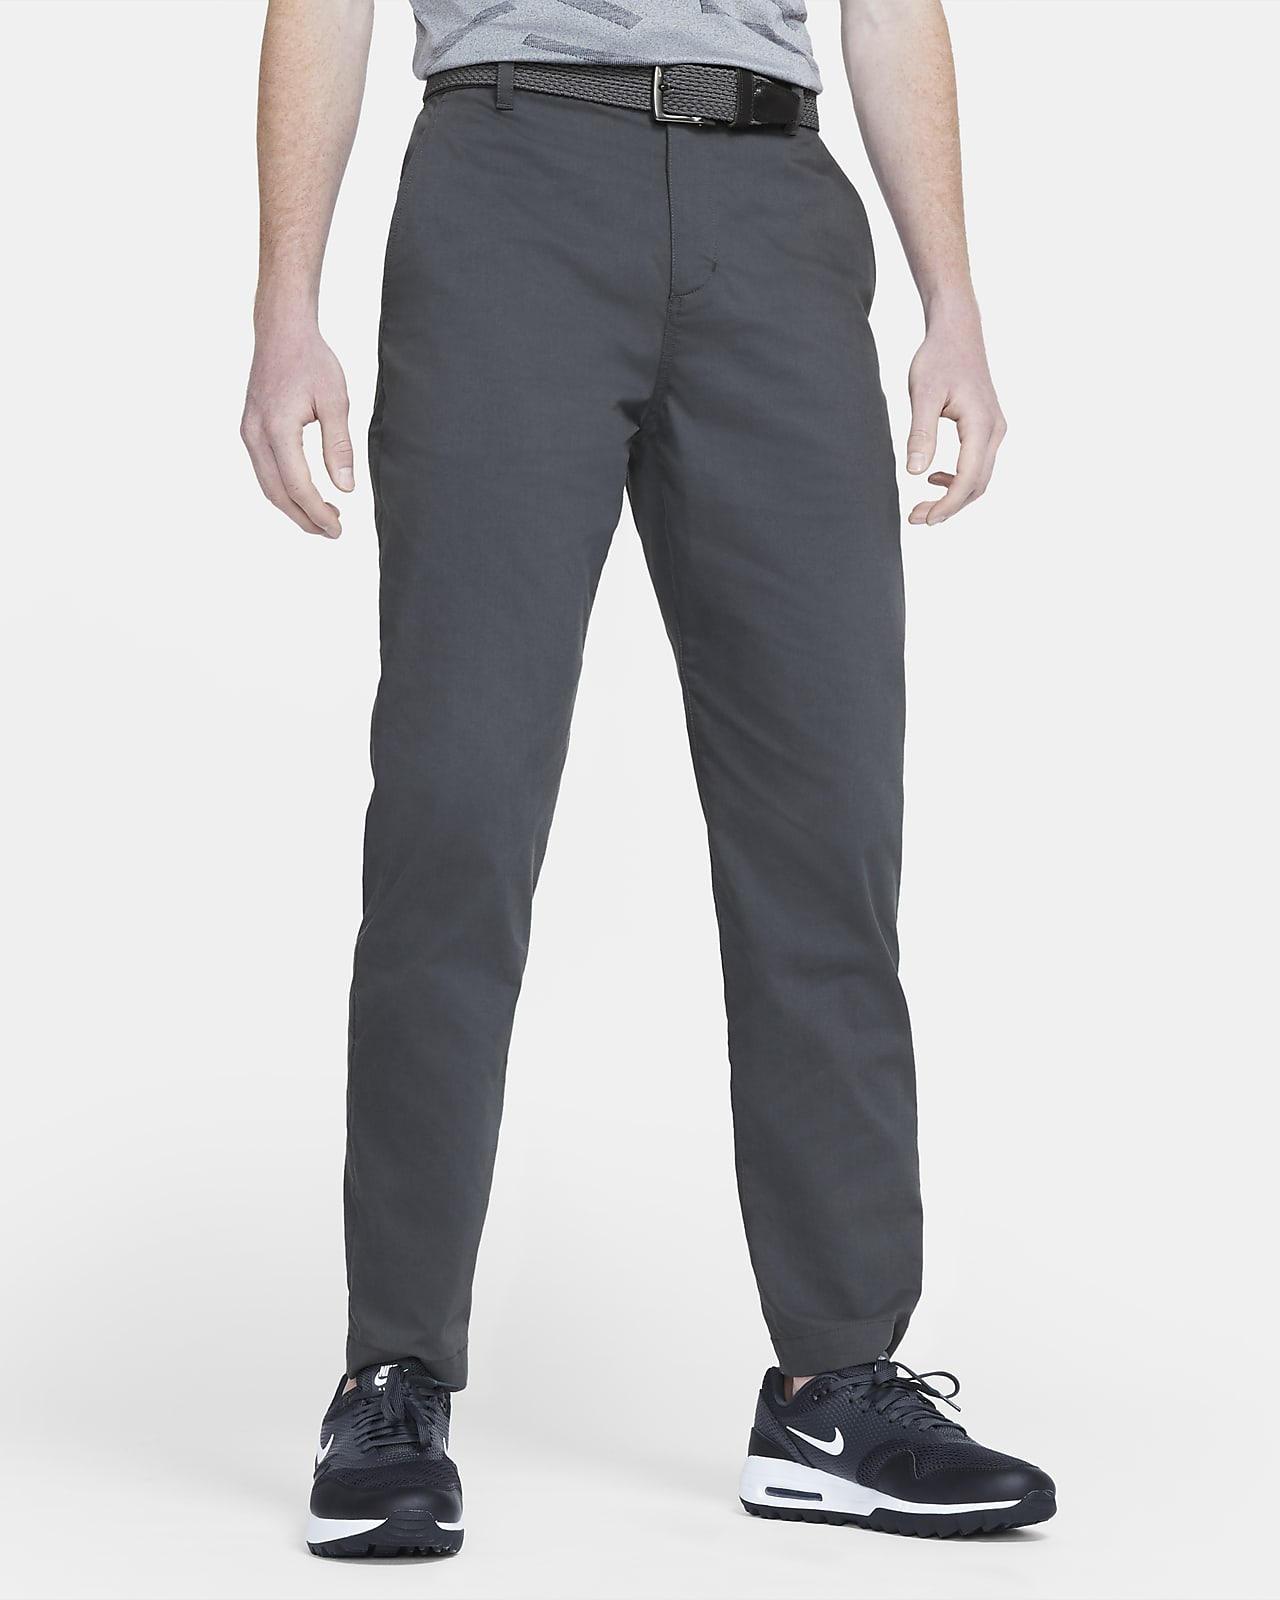 Standard Fit Golf Chino Trousers. Nike FI